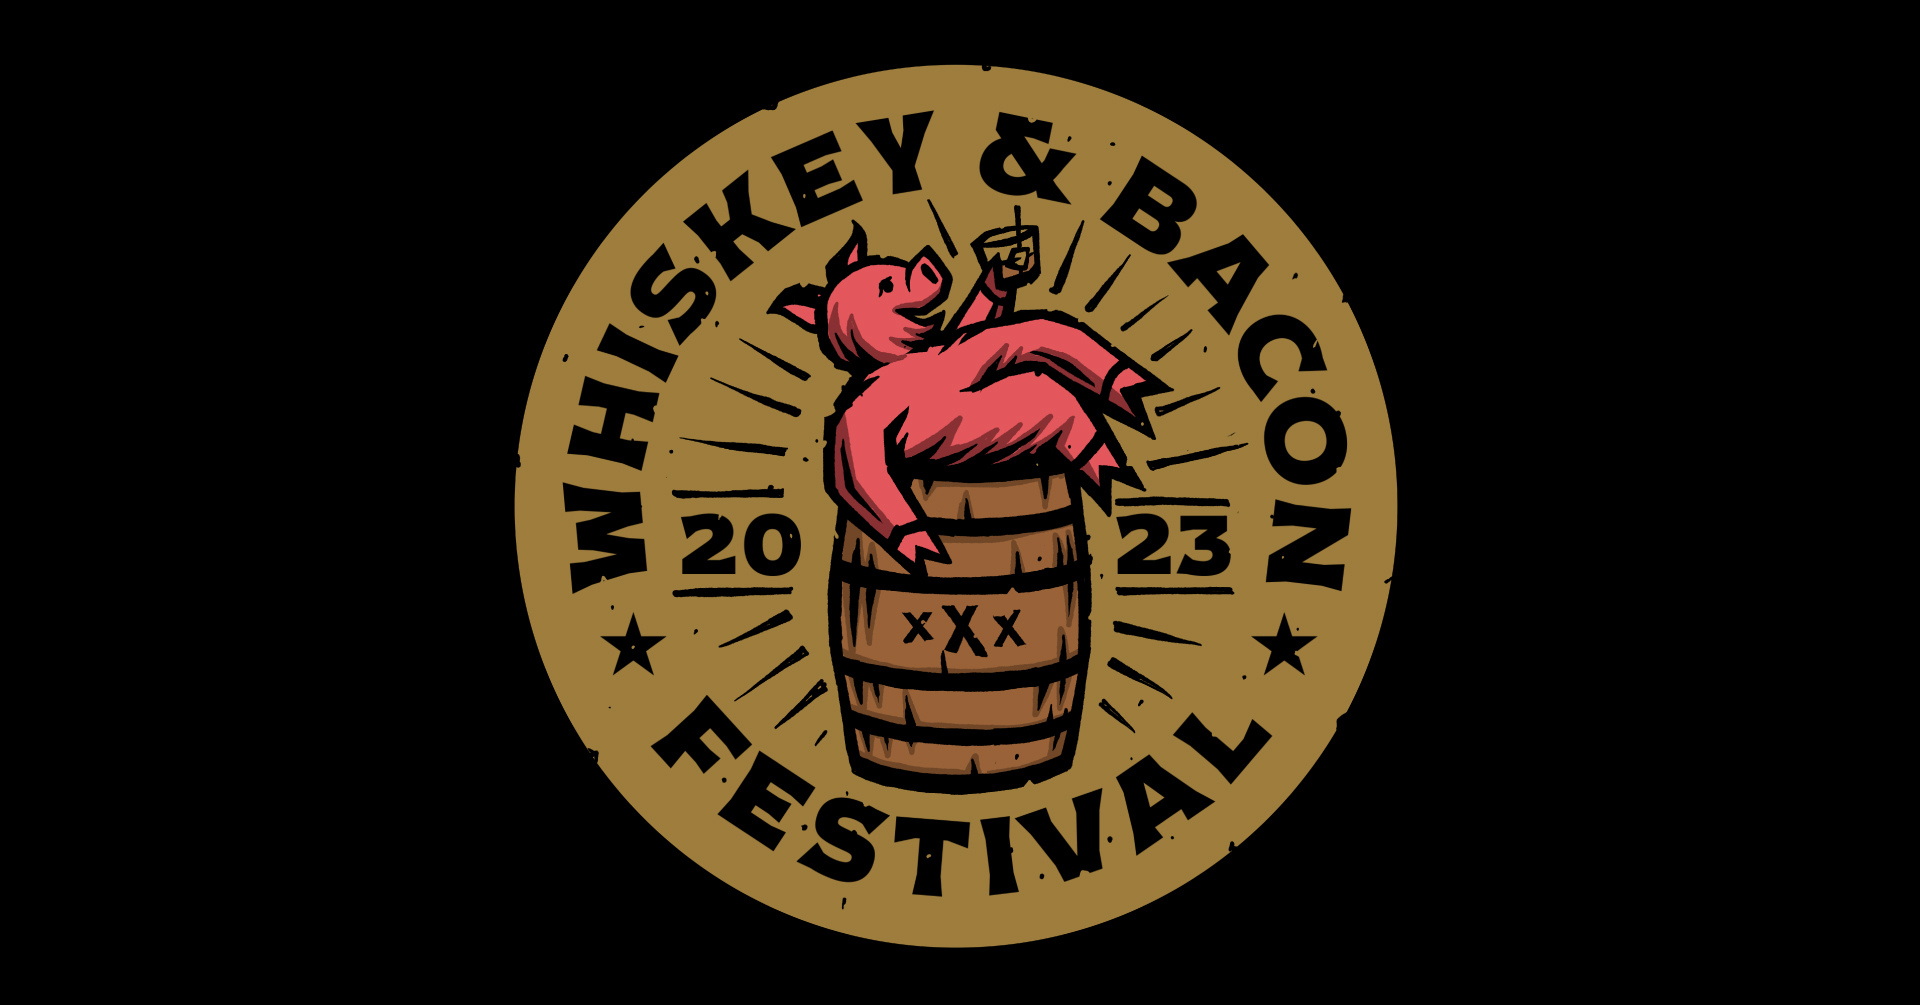 Whiskey & Bacon Festival 